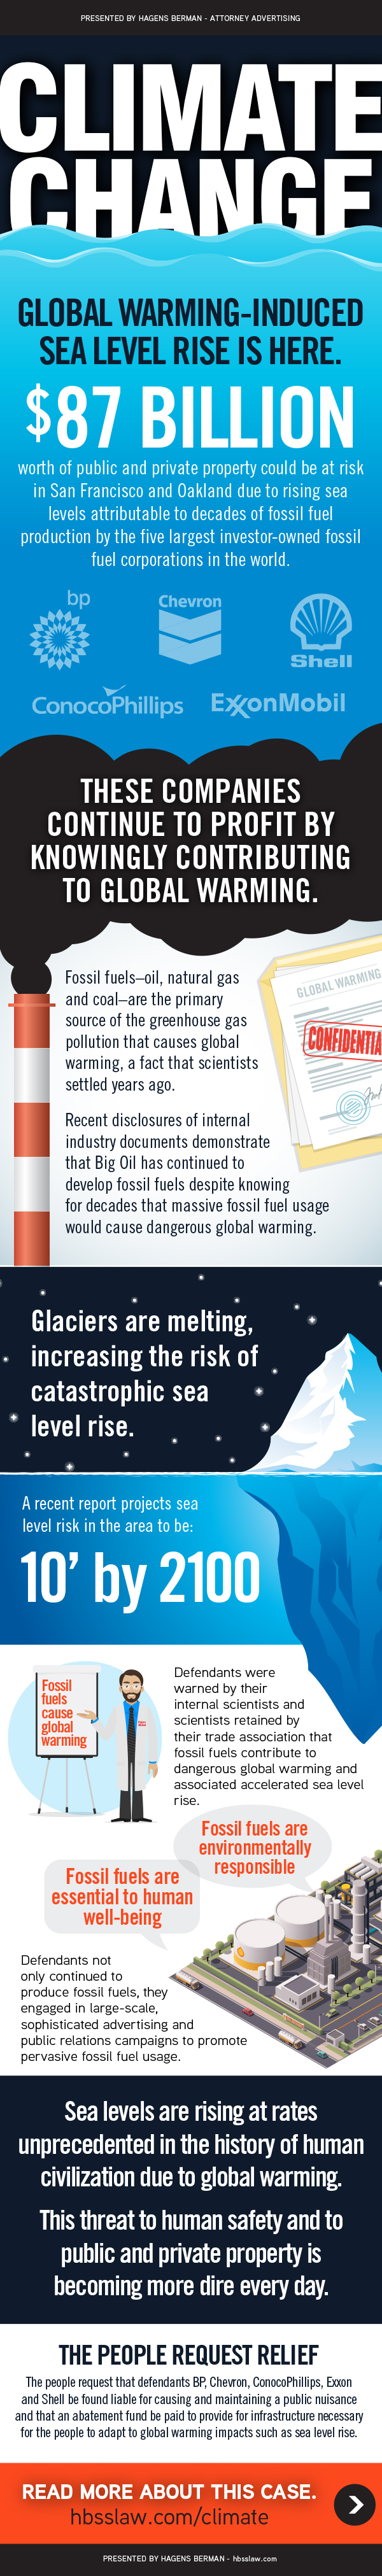 Hagens Berman Climate Change Infographic